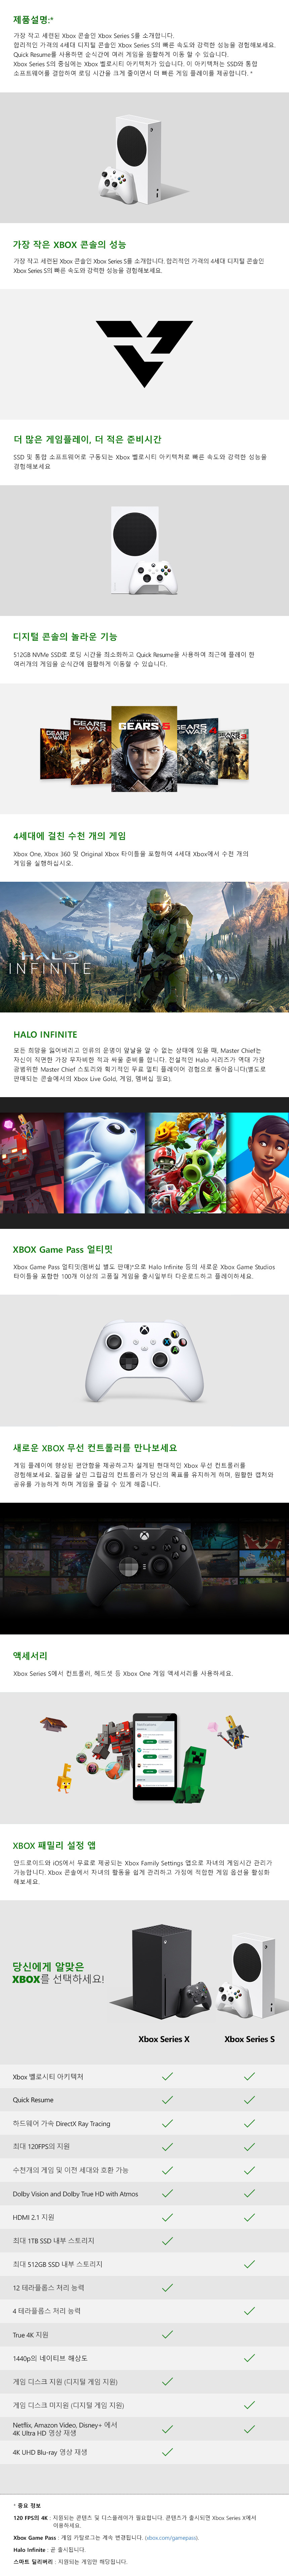 Xbox-S.jpg